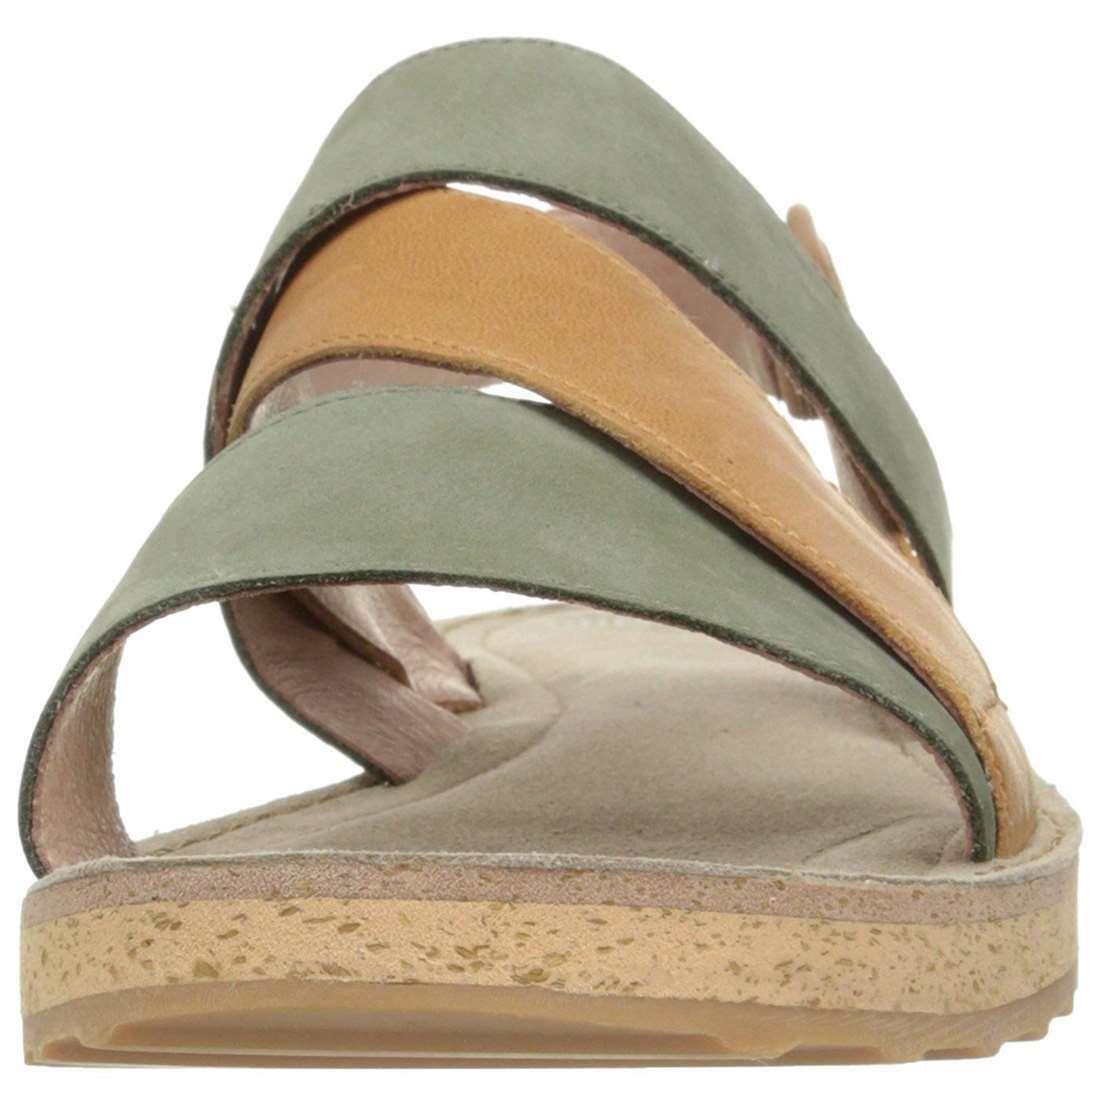 Camper Women`s Pim Pom Sandals Leather Strap Open Toe Summer Shoes Size 6 - Green